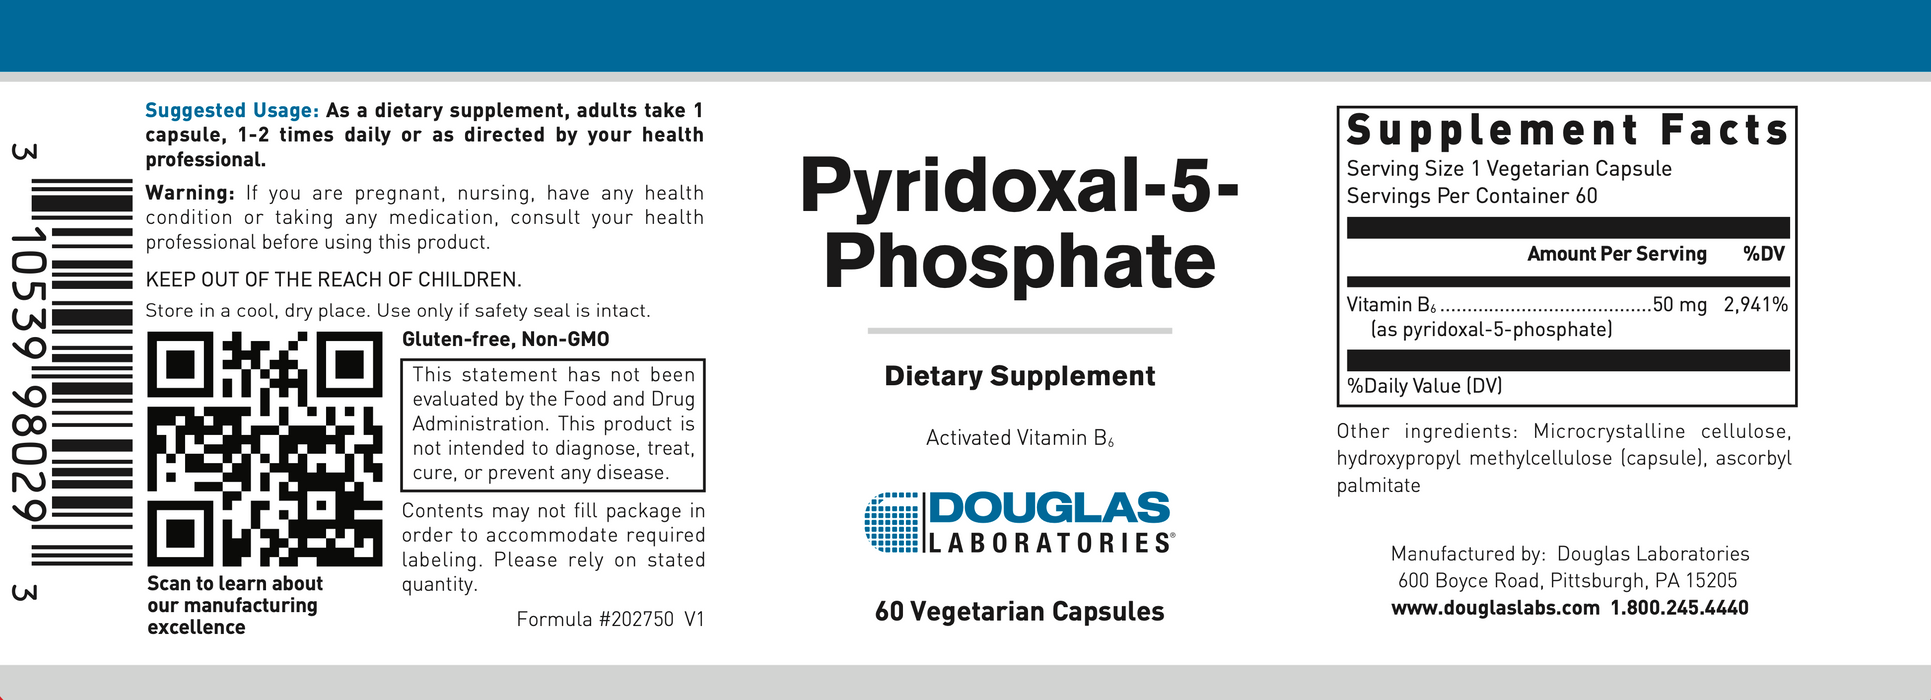 Pyridoxal-5-Phosphate-Vitamins & Supplements-Douglas Laboratories-60 Capsules-Pine Street Clinic